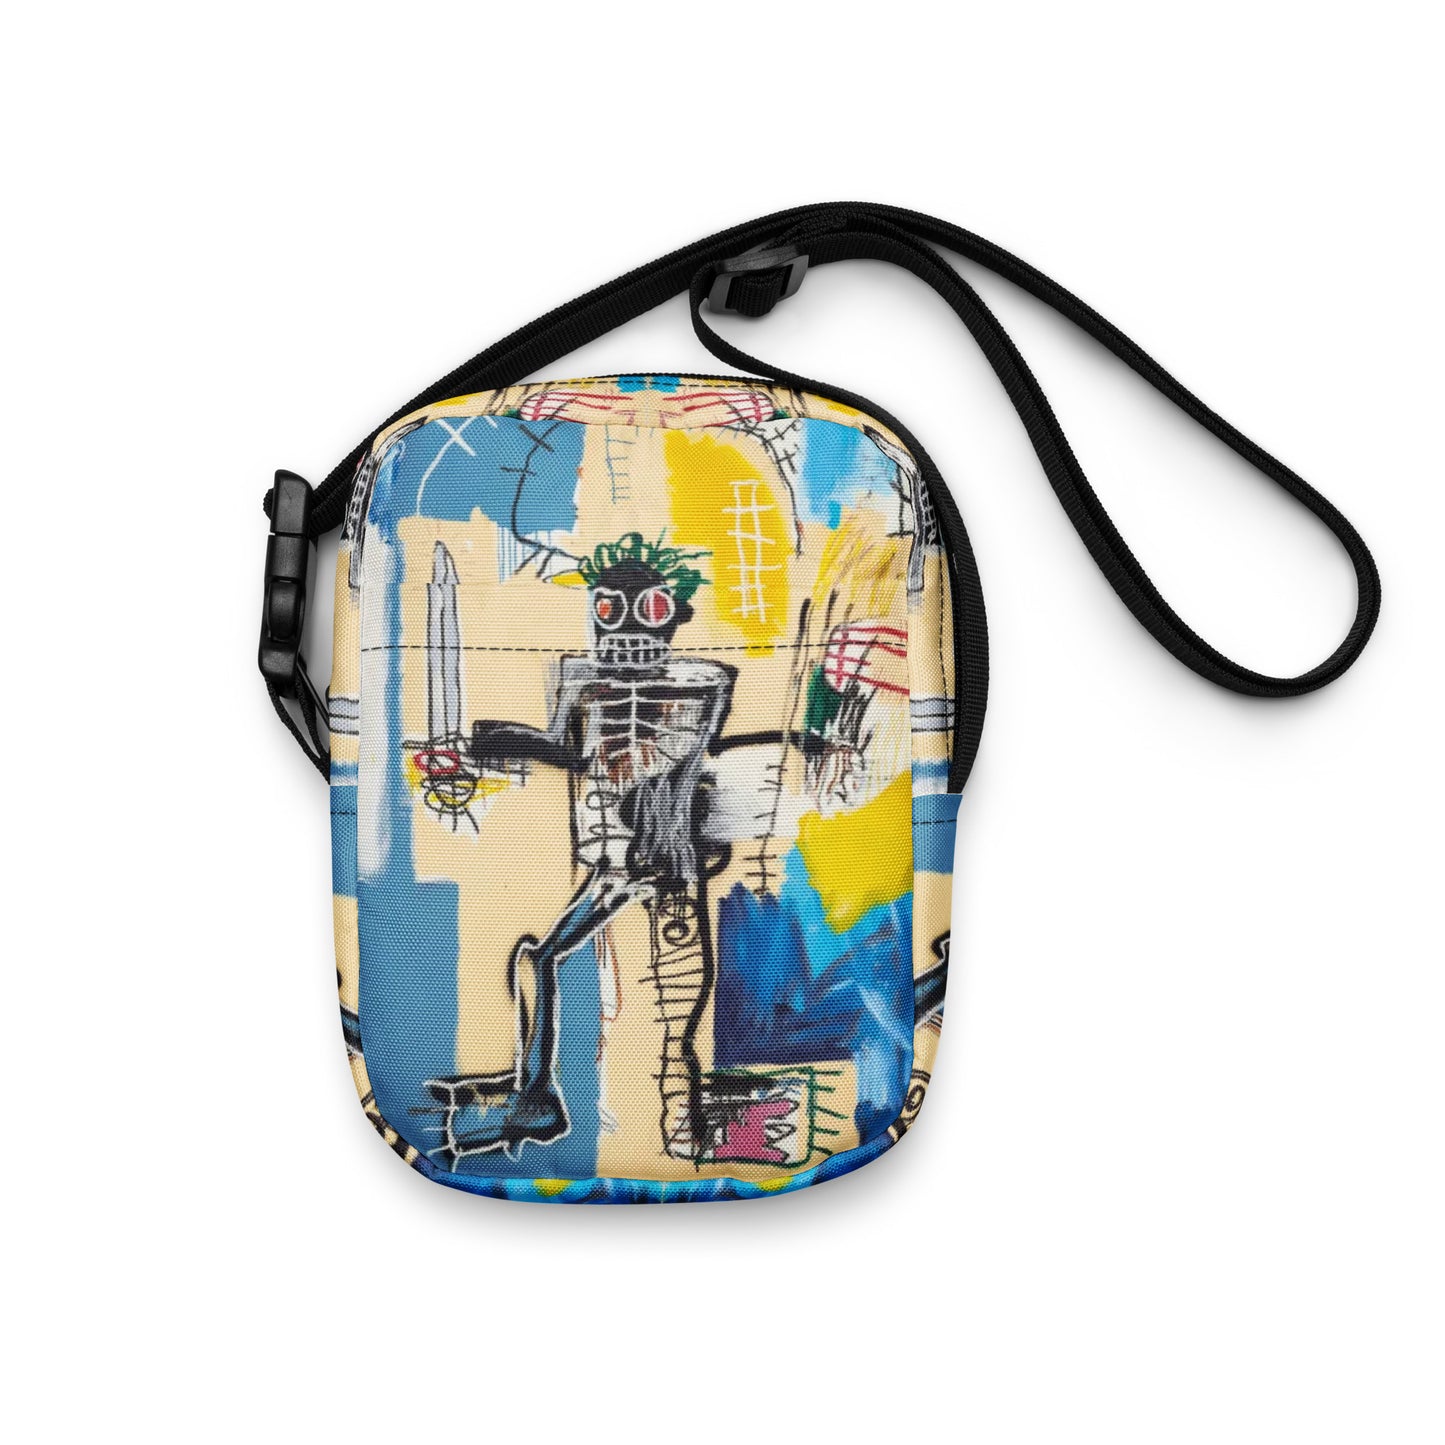 Jean-Michel Basquiat "Warrior" Artwork Bag